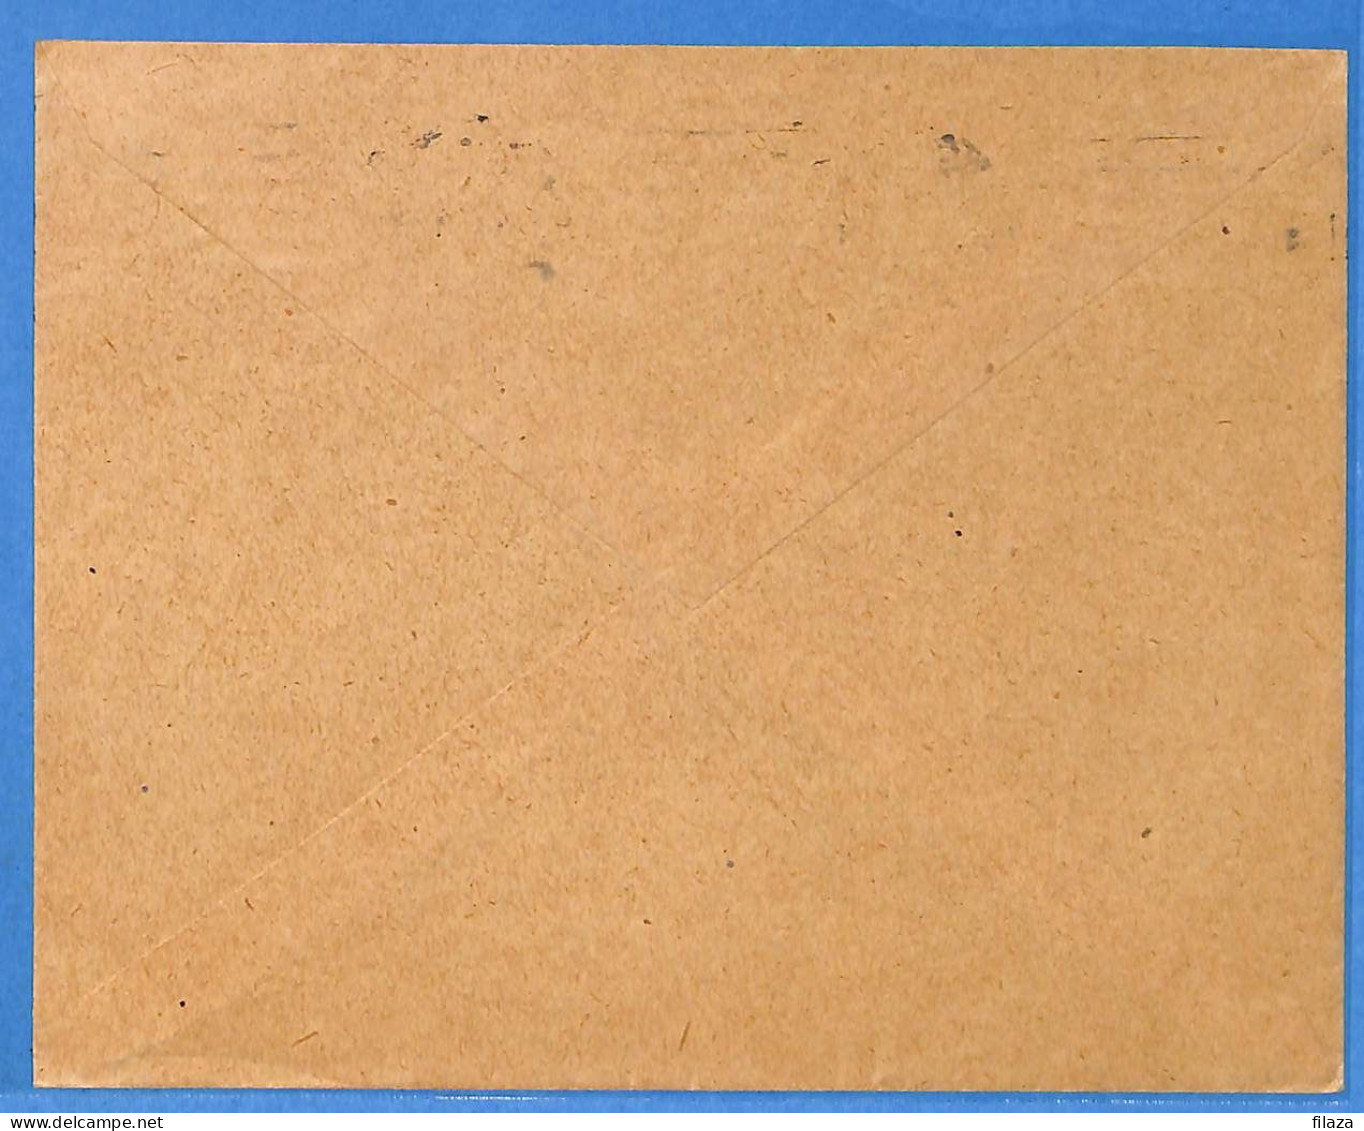 Allemagne Reich 1921 - Lettre De Nurnberg - G33414 - Briefe U. Dokumente